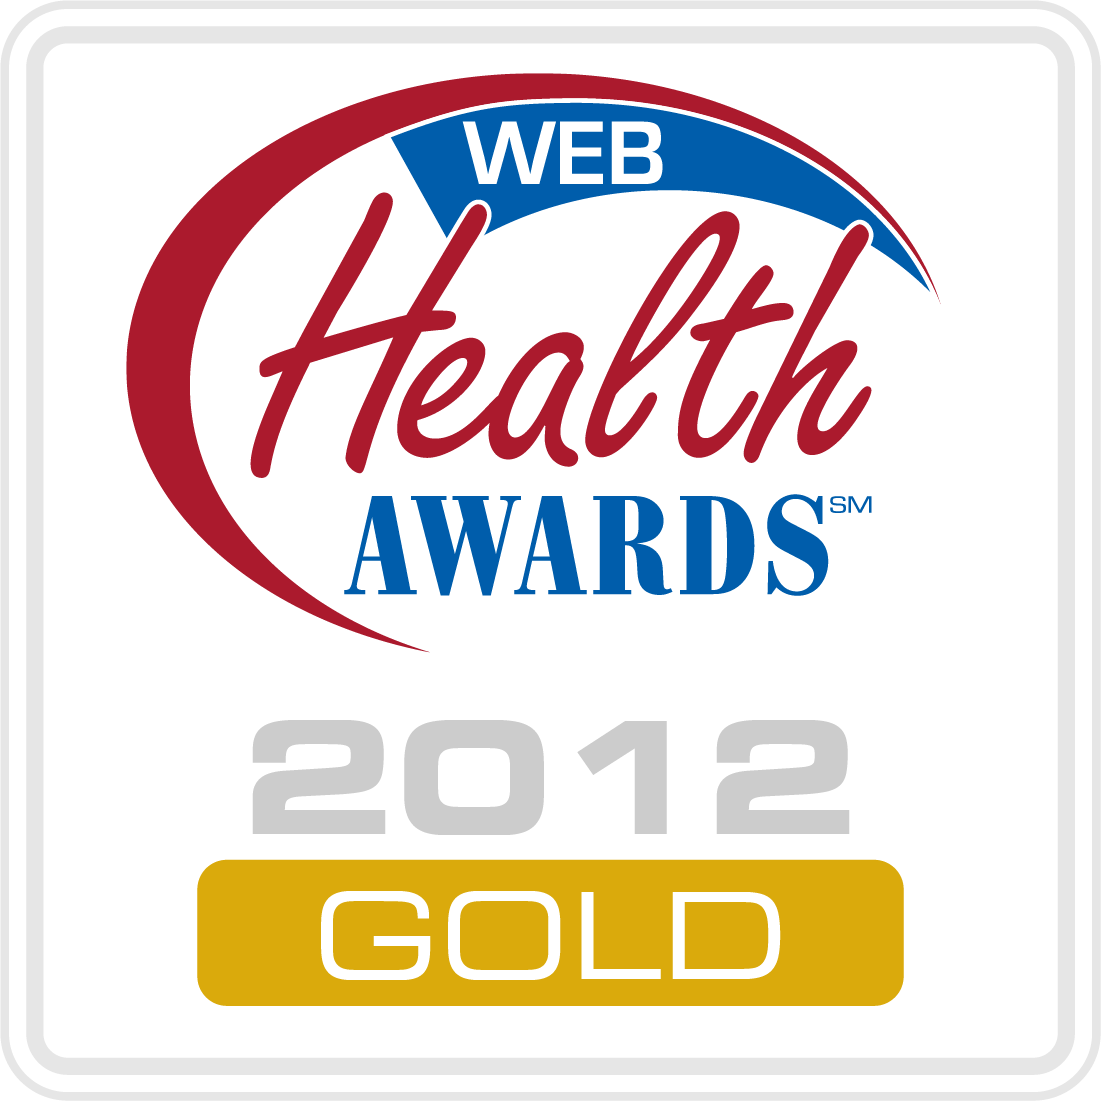 Our Heart Health Profiler Wins Gold Web Health Award